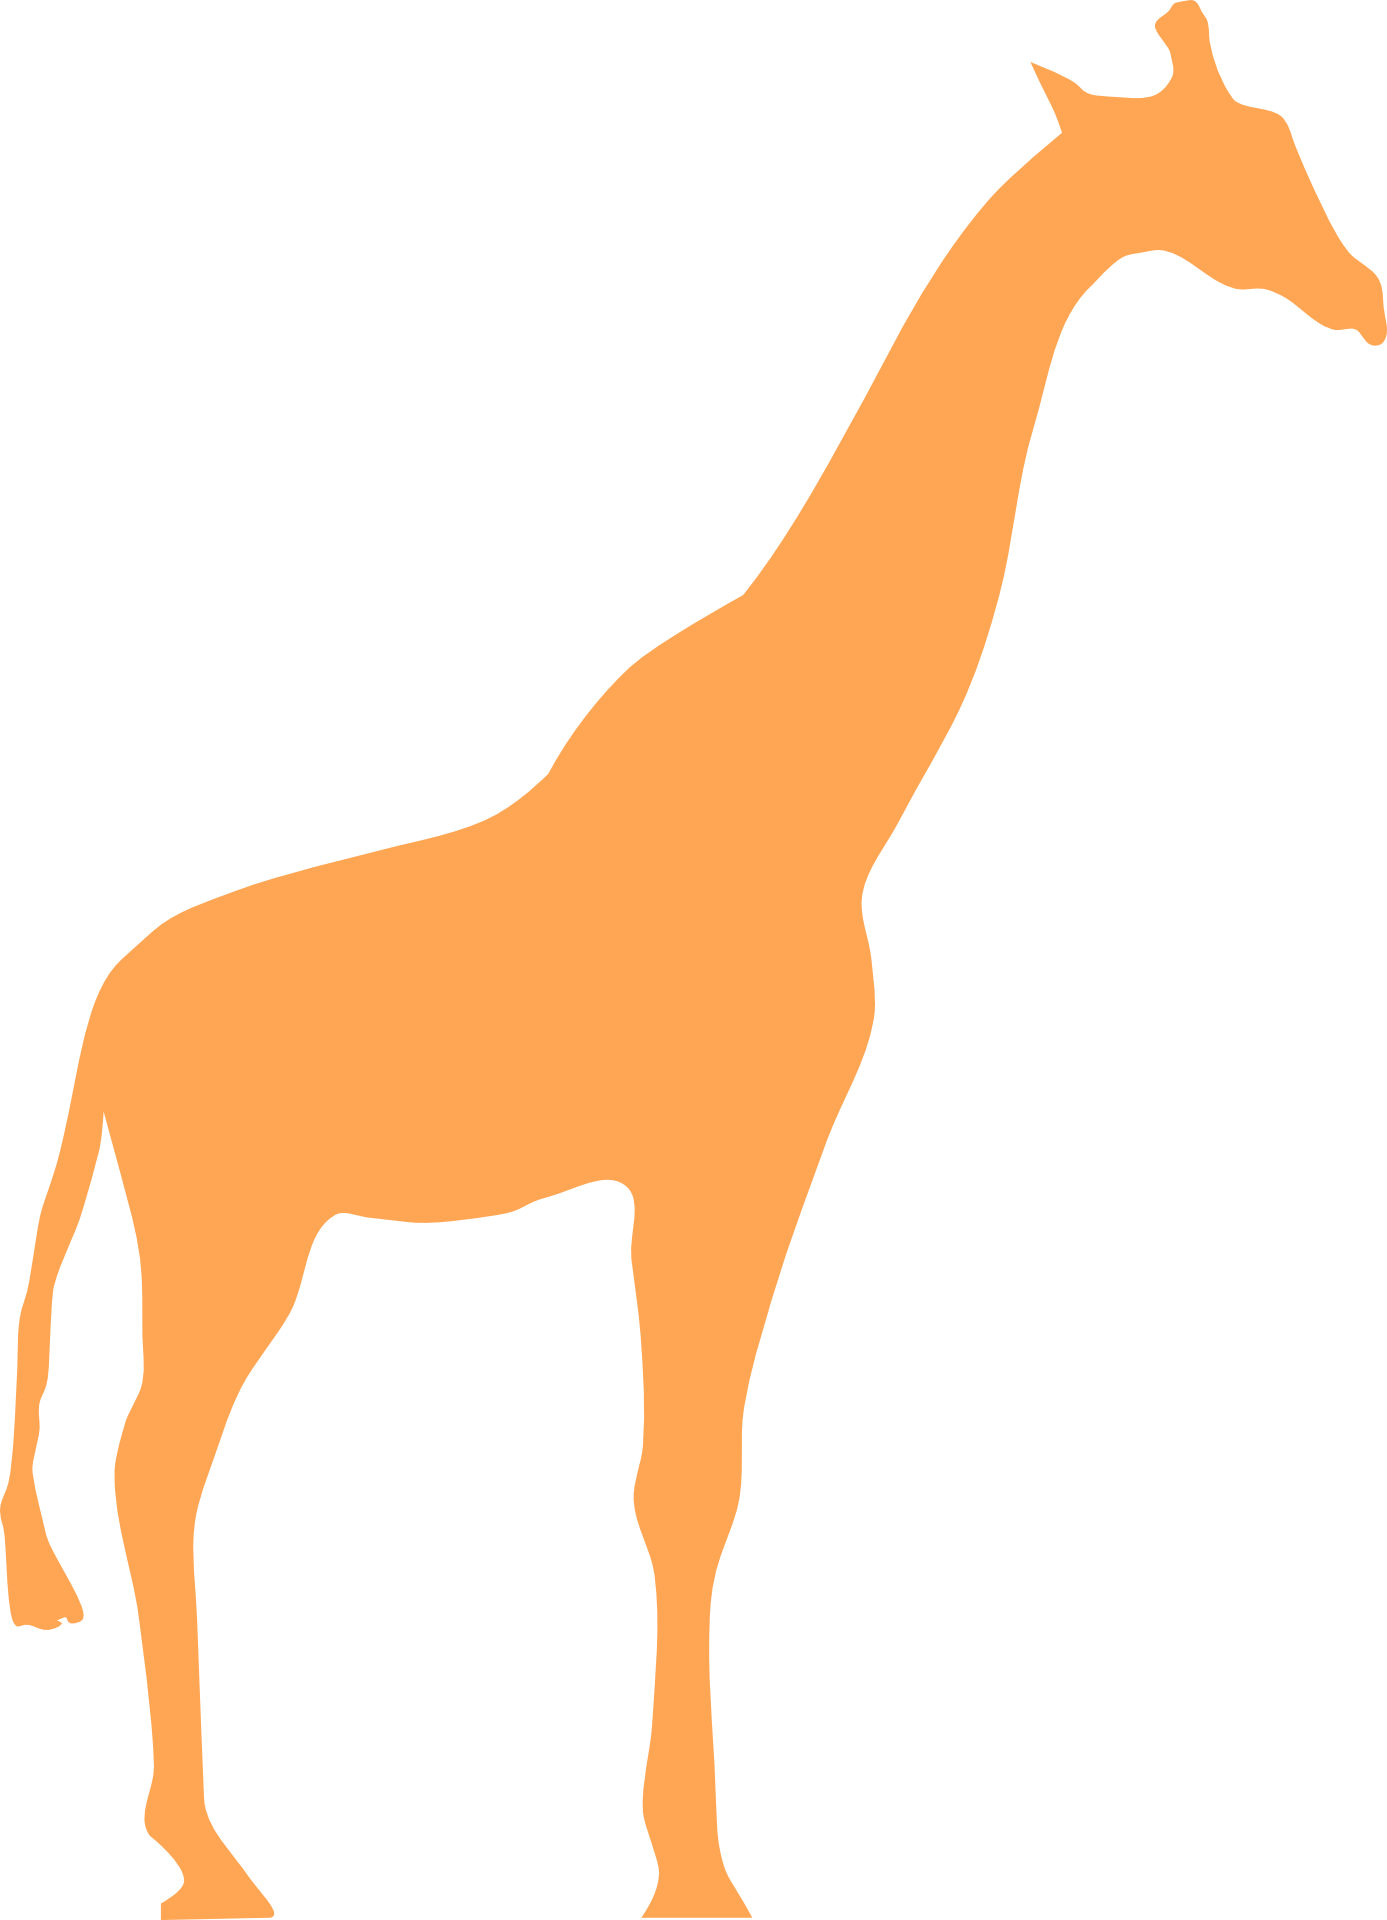 northern-giraffe-silhouette-clip-art-giraffe-png-download-1387-1920